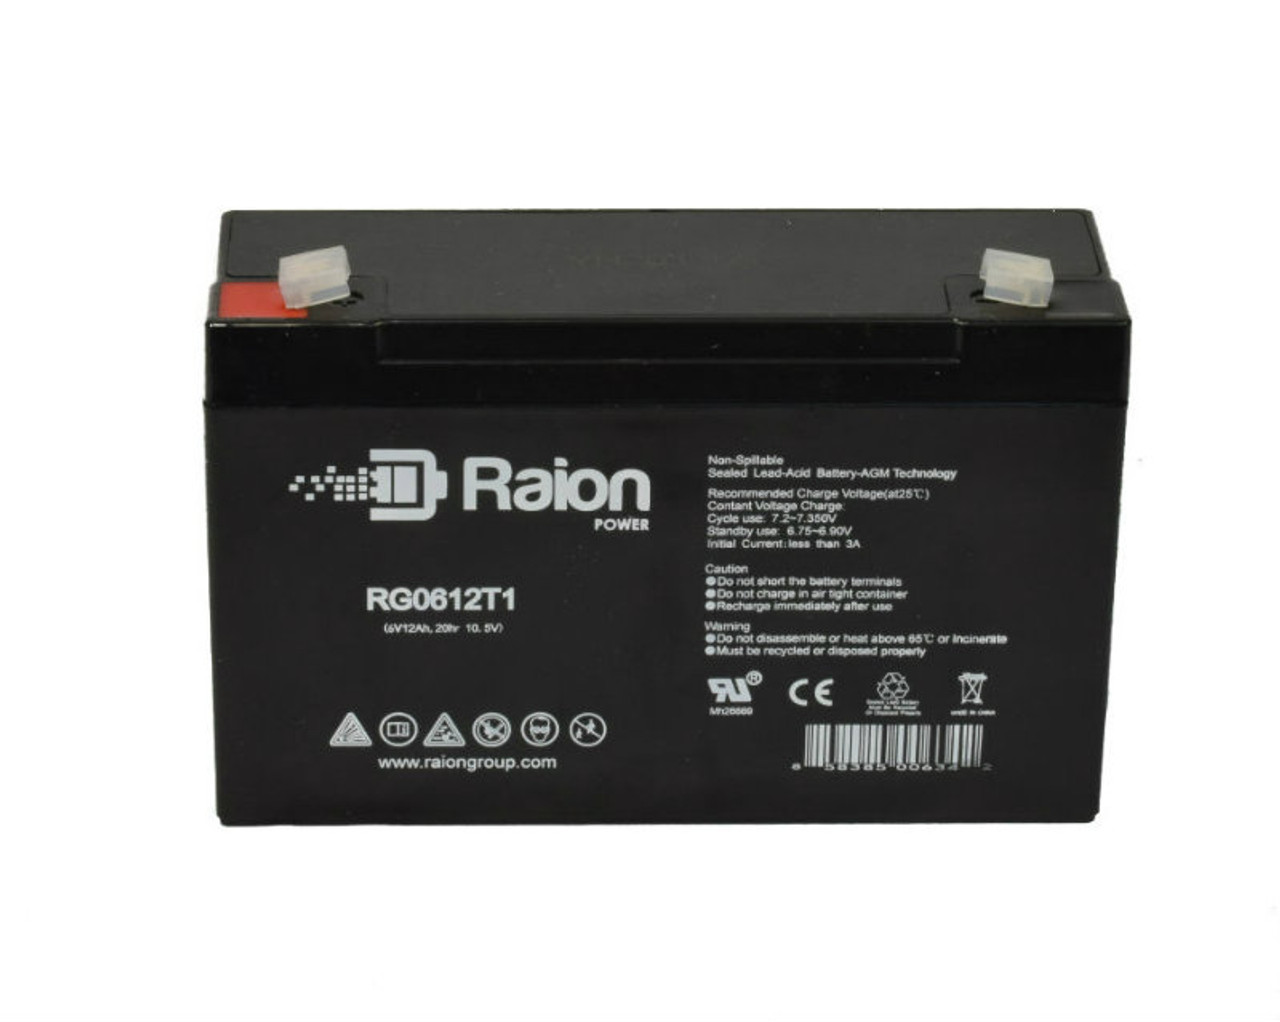 Raion Power RG06120T1 SLA Battery for Critikon Simplicity Volumetric Pump